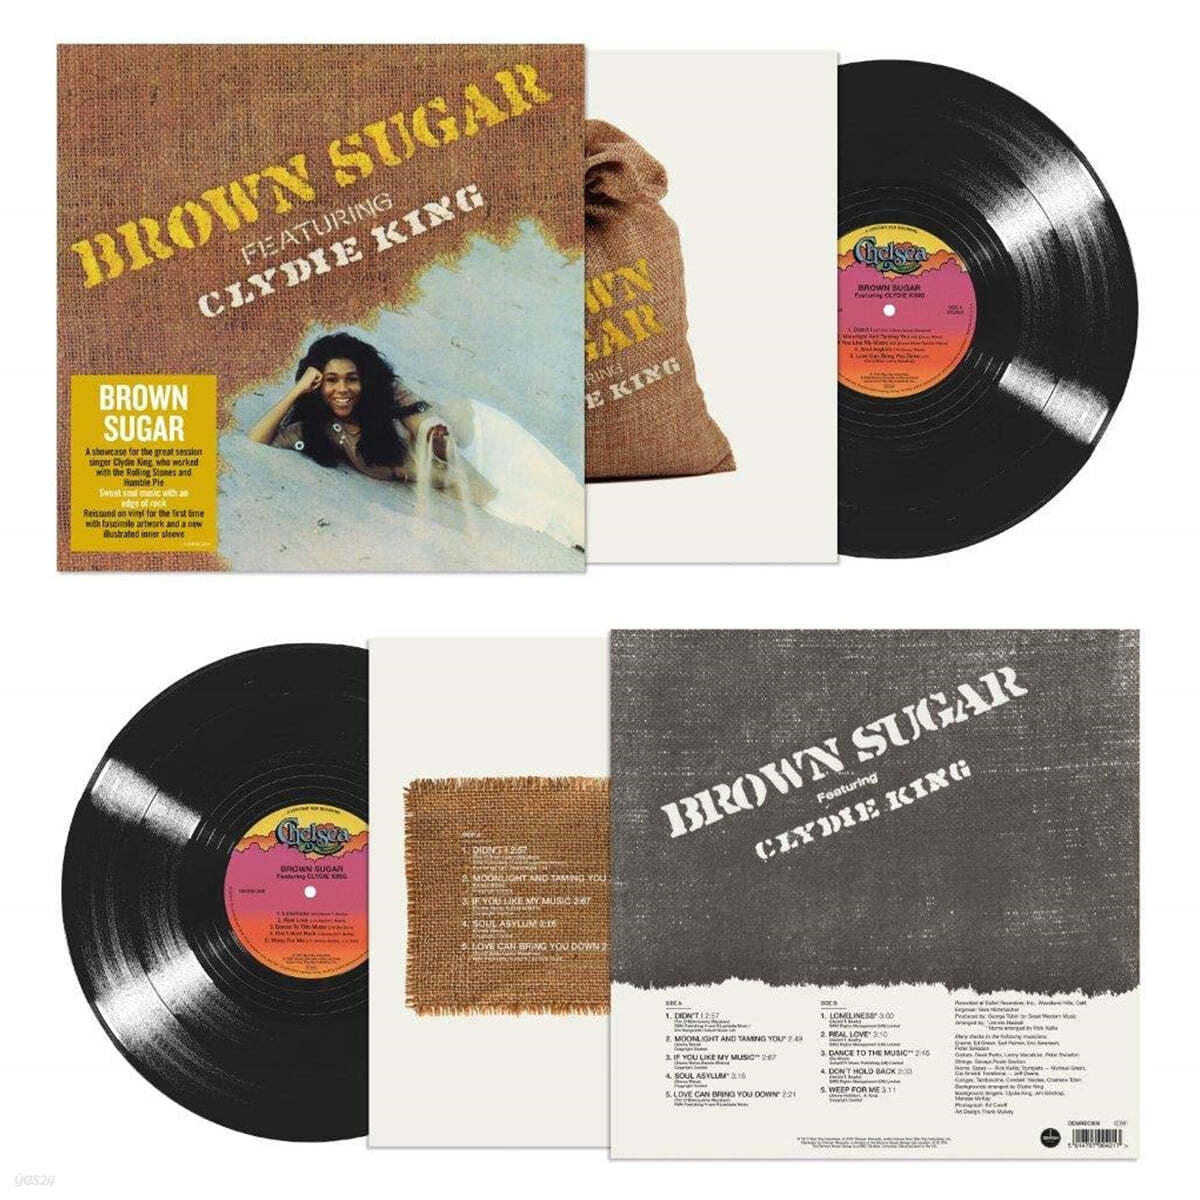 Brown Sugar & Clydie King Black (브라운 슈가 & 클라이디 킹 블랙) - Brown Sugar [LP]